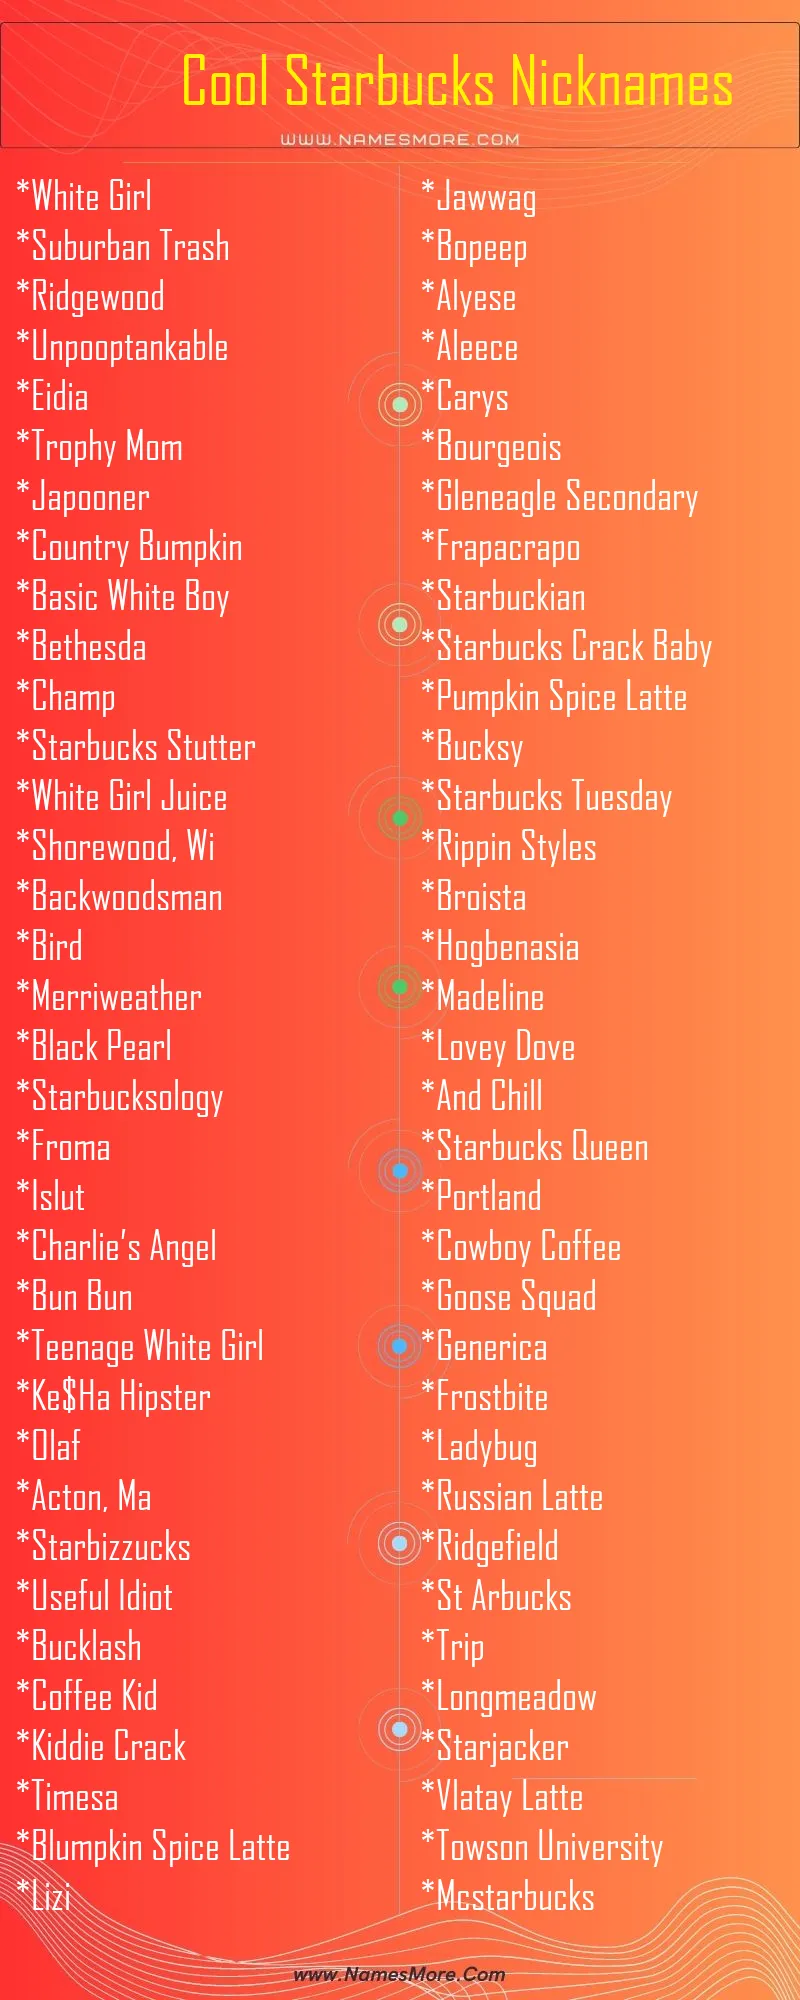 1900+ Starbucks Nicknames (Cool, Creative & Unique) List Infographic